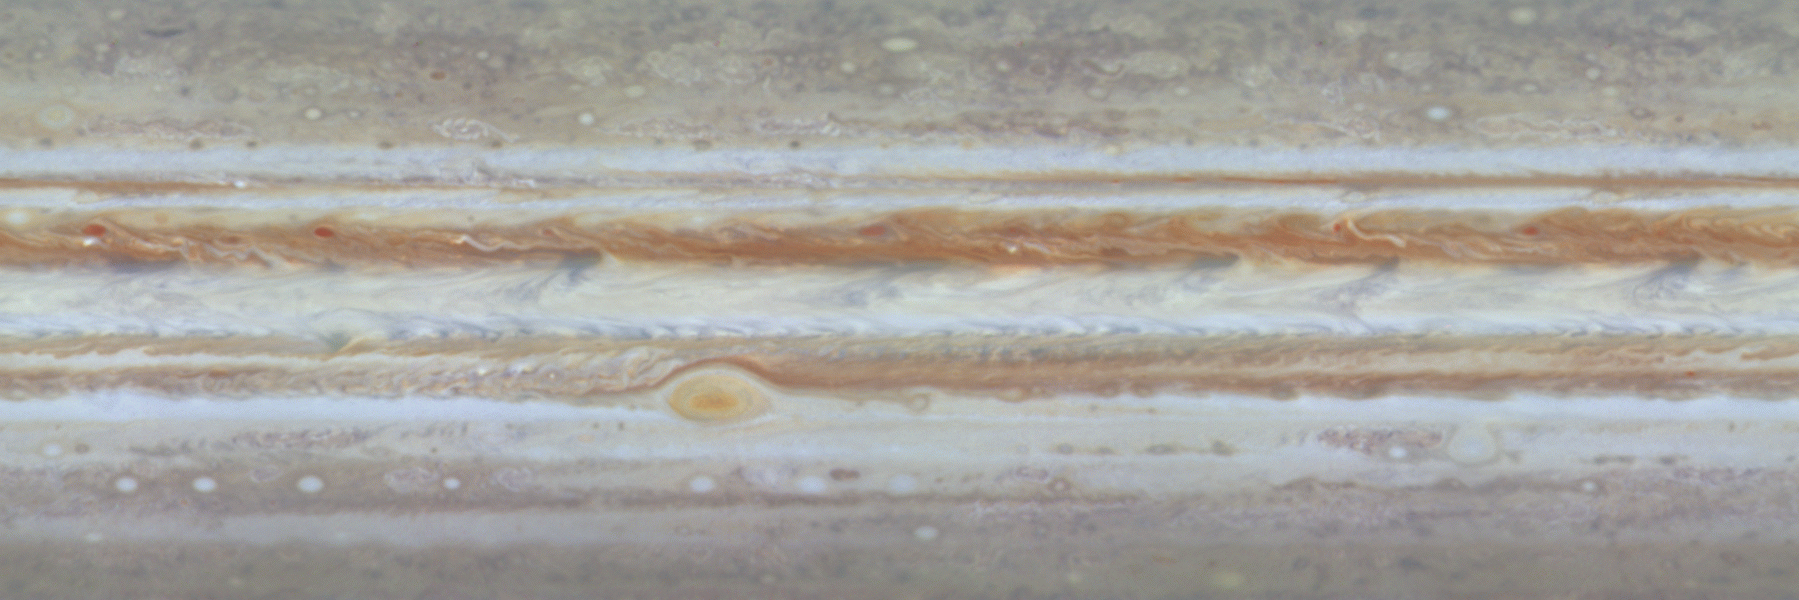 L’atmosphère jovienne : Animation - Jupiter (Auteur : Voyager 1)